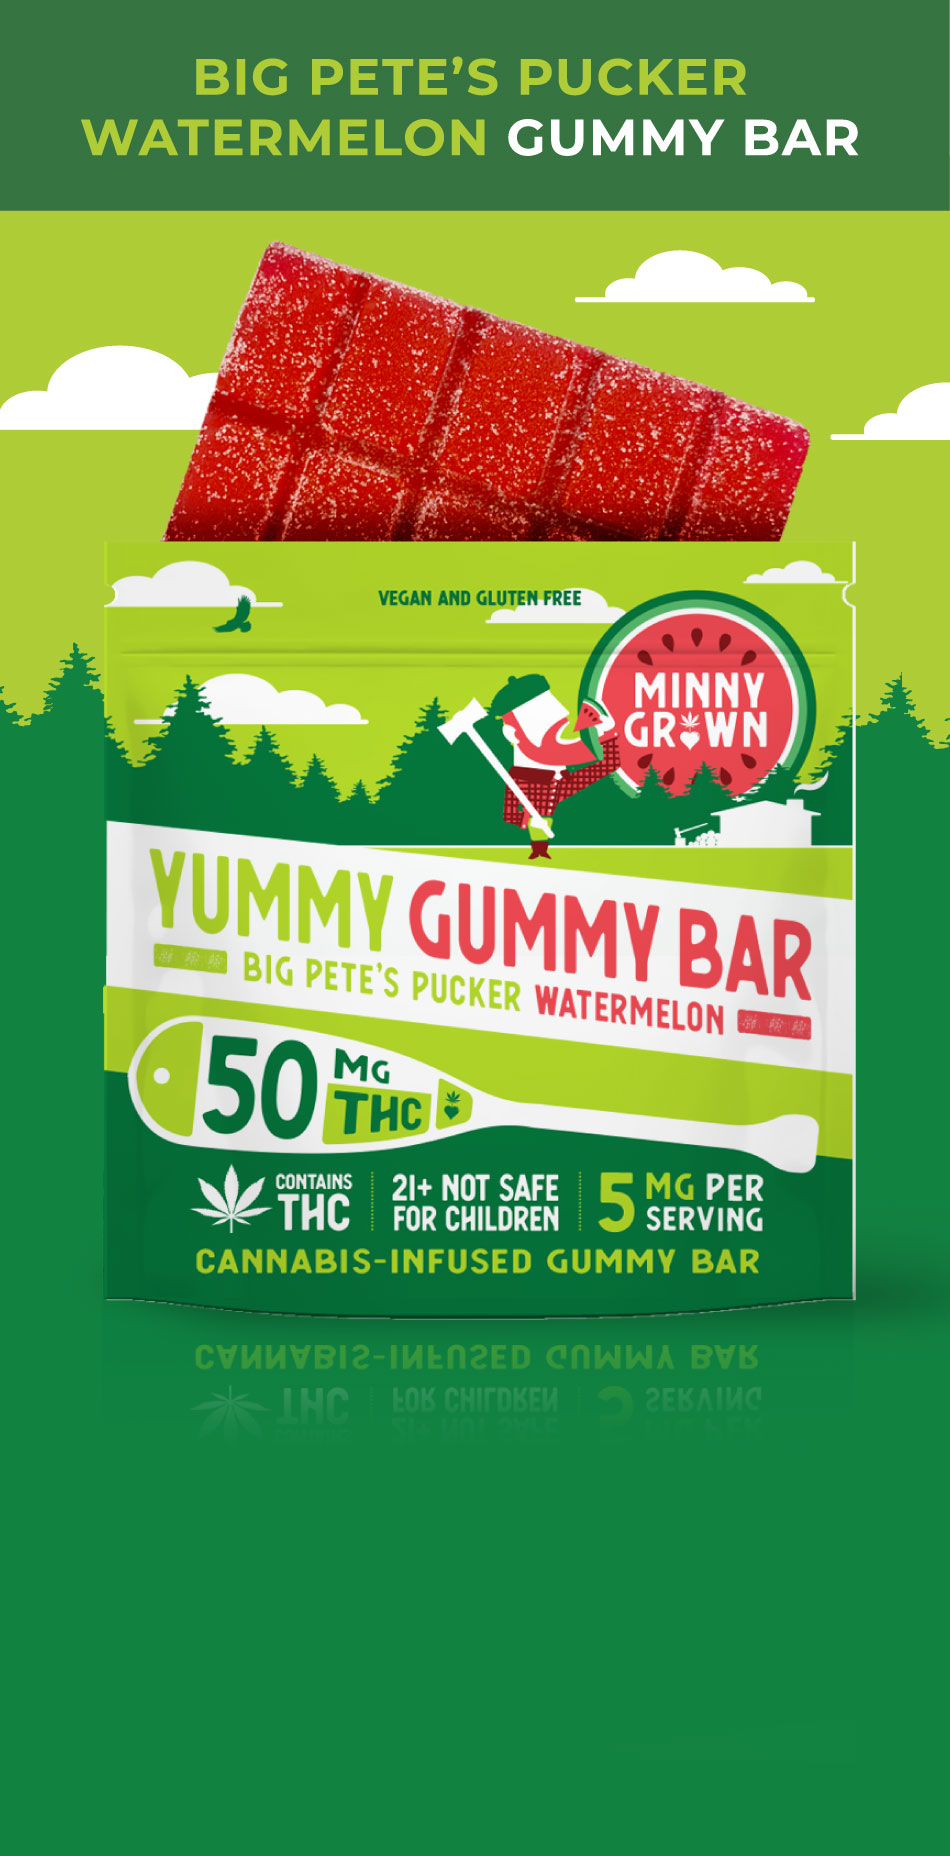 Featured image for “Yummy Gummy Bar – Watermelon”